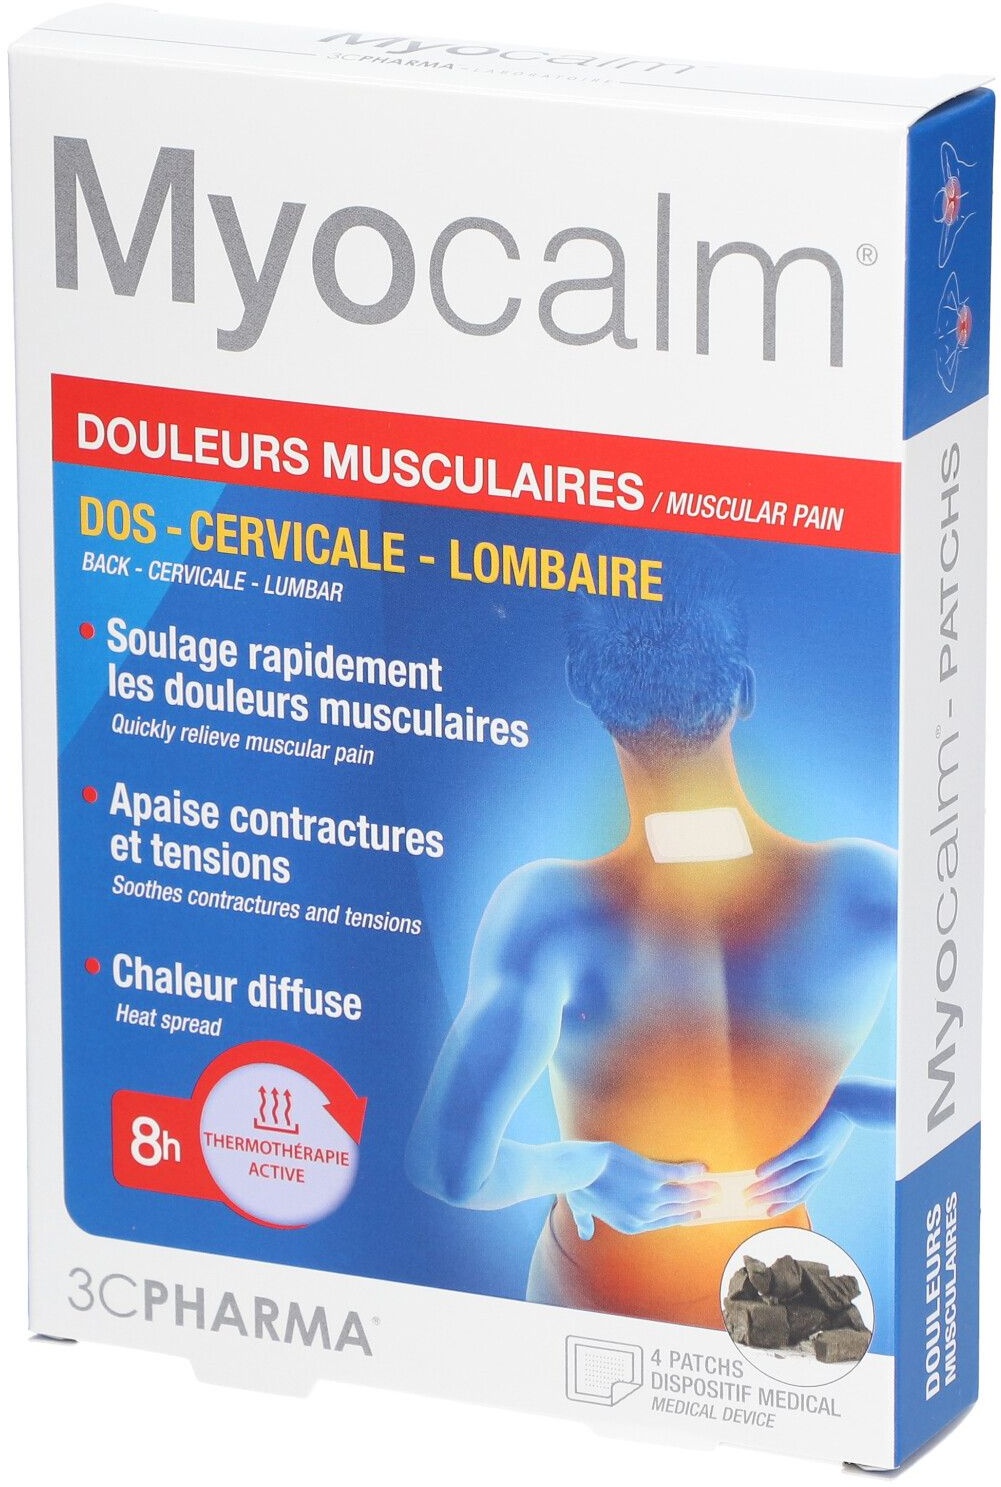 Myocalm® DOULEURS MUSCULAIRES pansement(s)